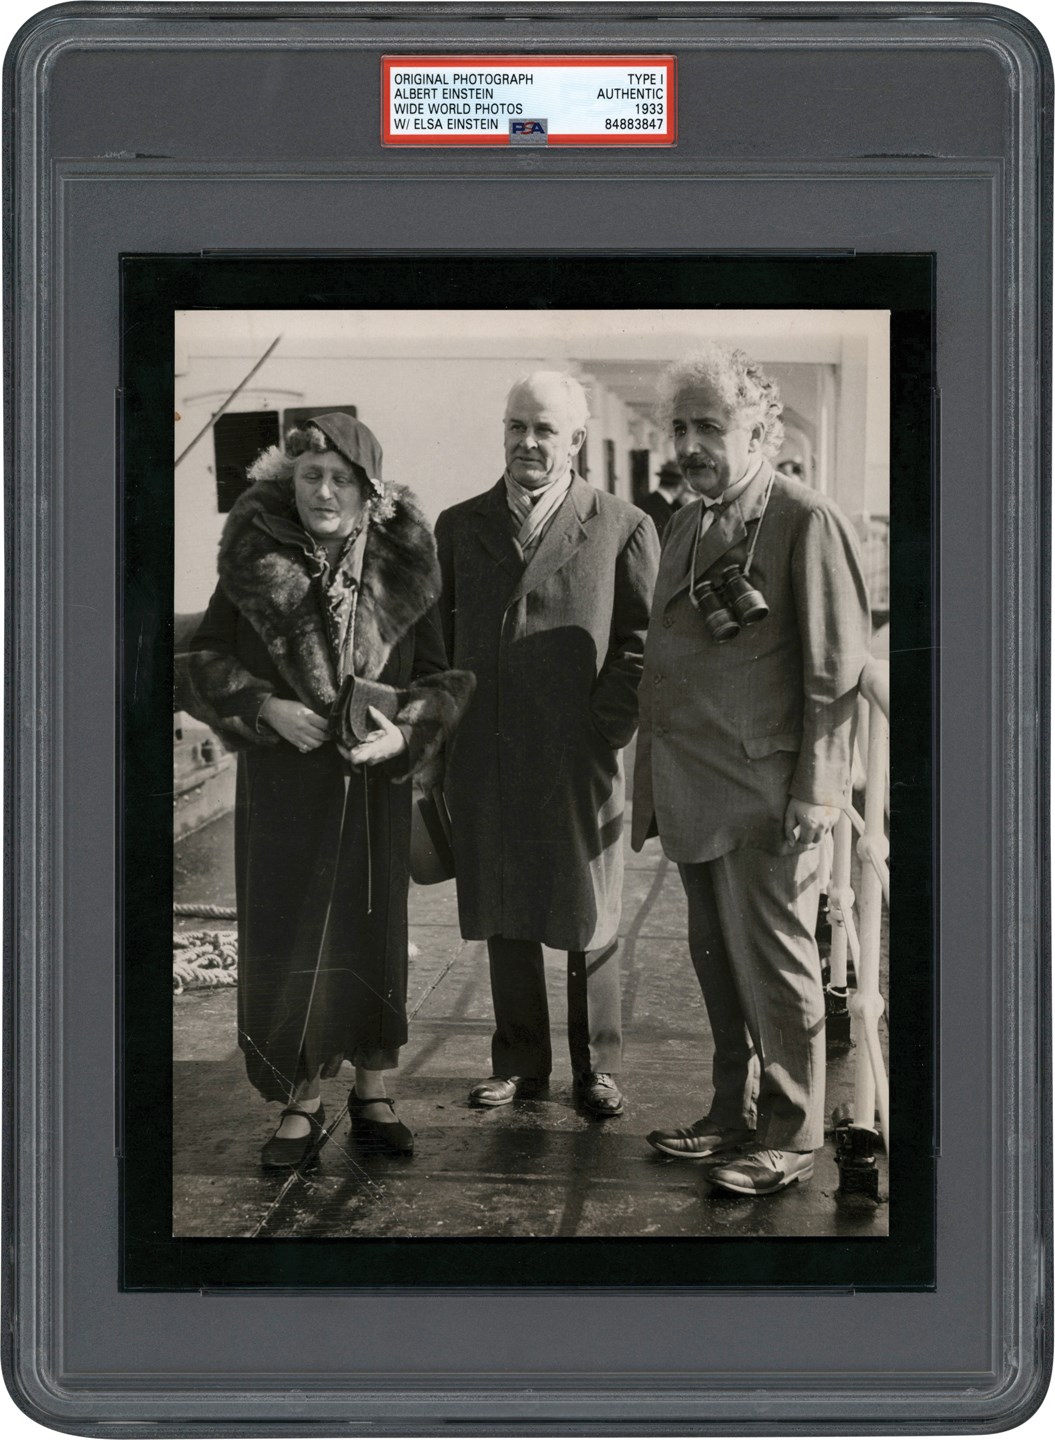 Vintage Sports Photographs - 1933 Albert Einstein & Wife Photograph (PSA Type I)